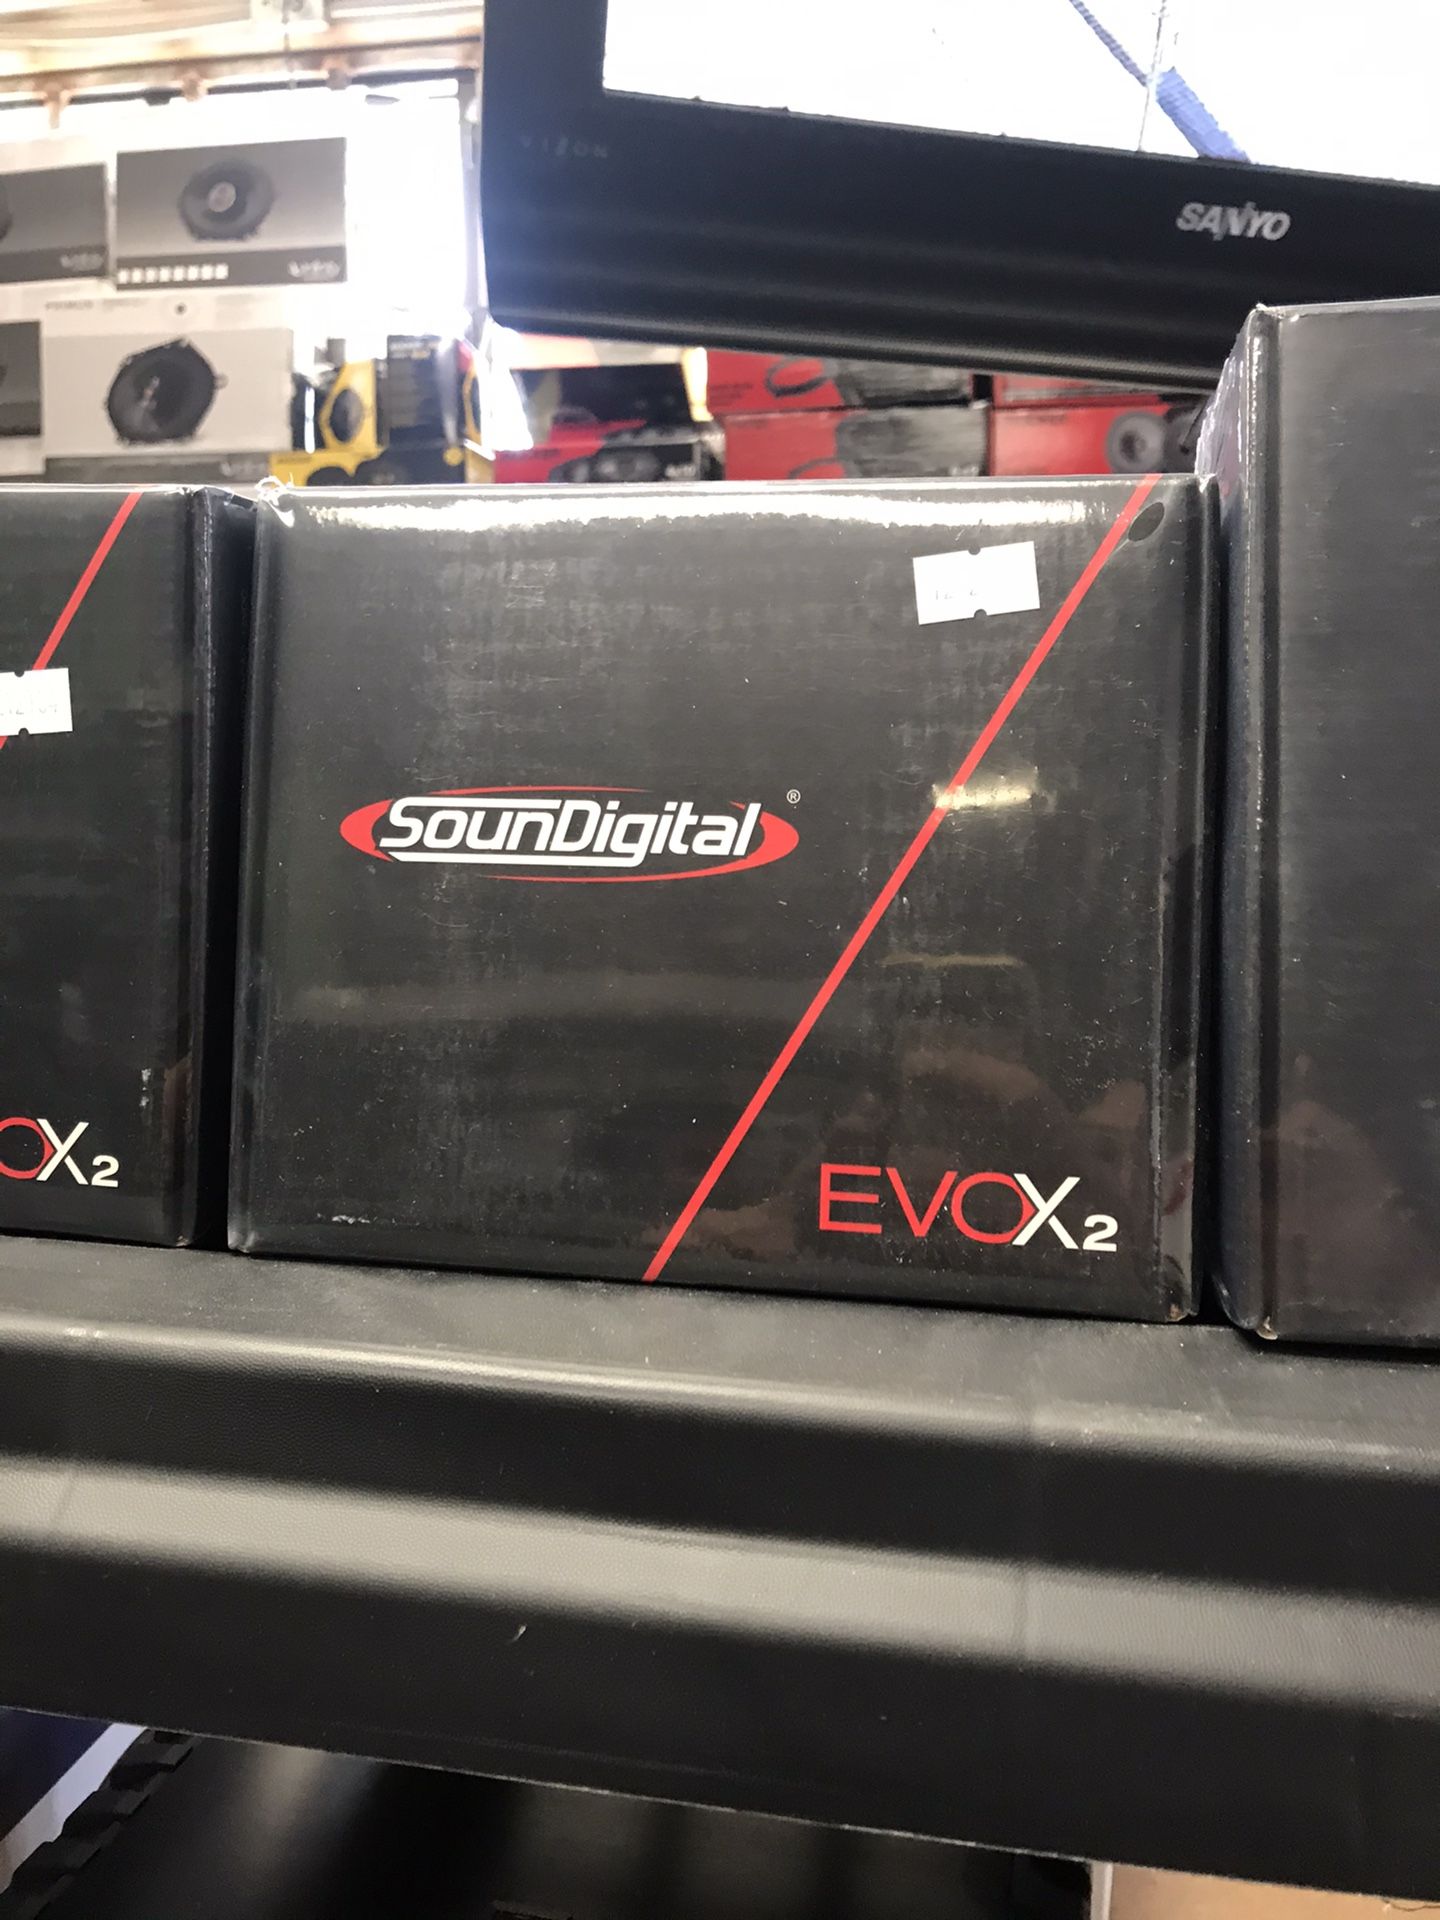 Soundigital Evox2 400.4 On Sale Today For 199.99